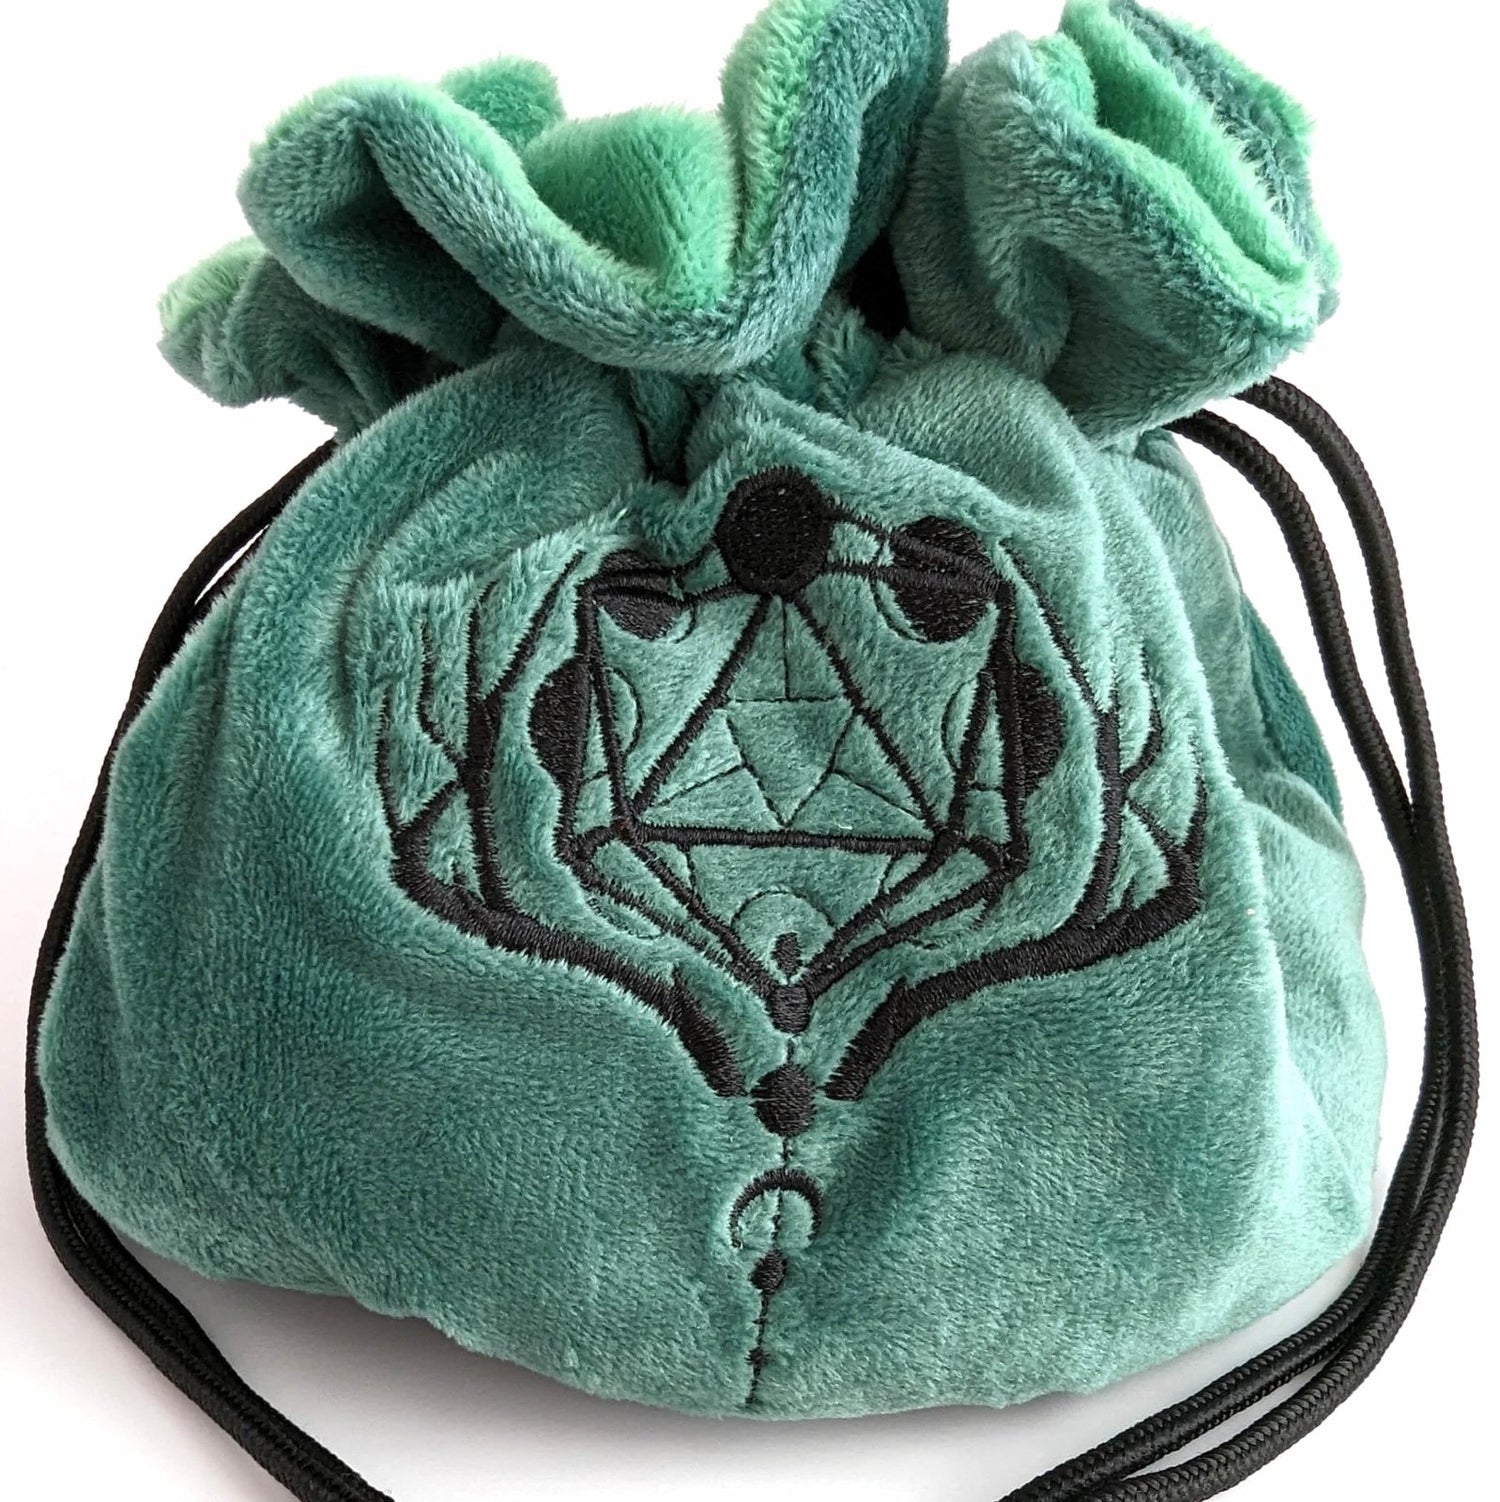 Druid multi-pocket large dice bag (green/black) - The Fourth Place